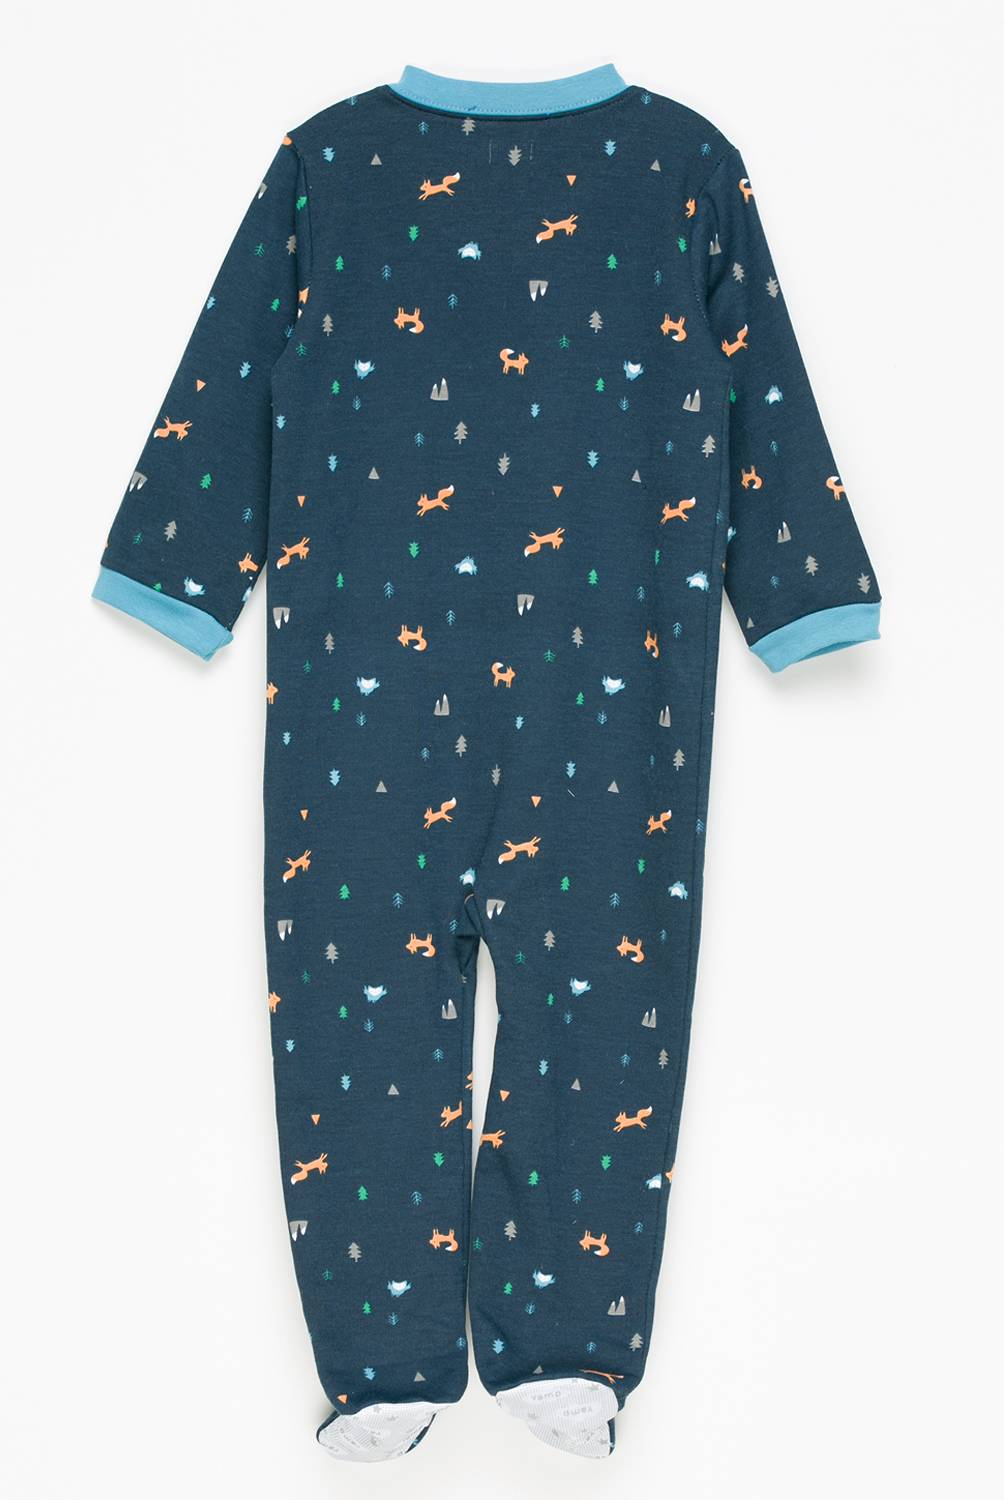 YAMP - Pijama algodón bebé niño